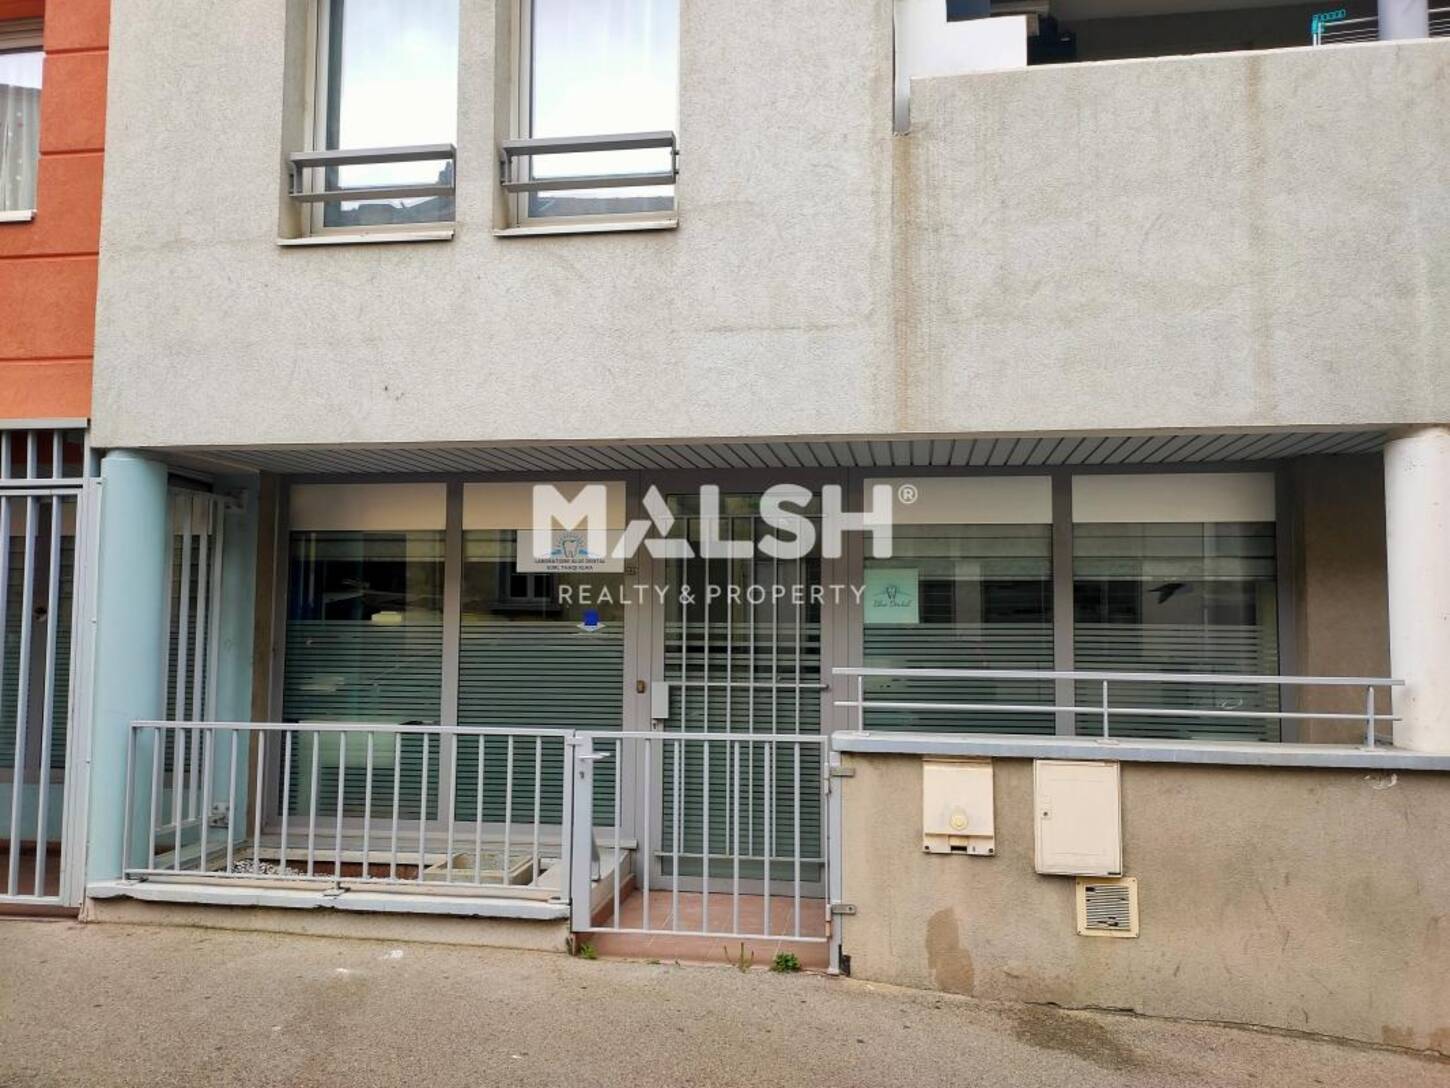 MALSH Realty & Property - Bureau - Lyon Sud Ouest - Oullins - 2